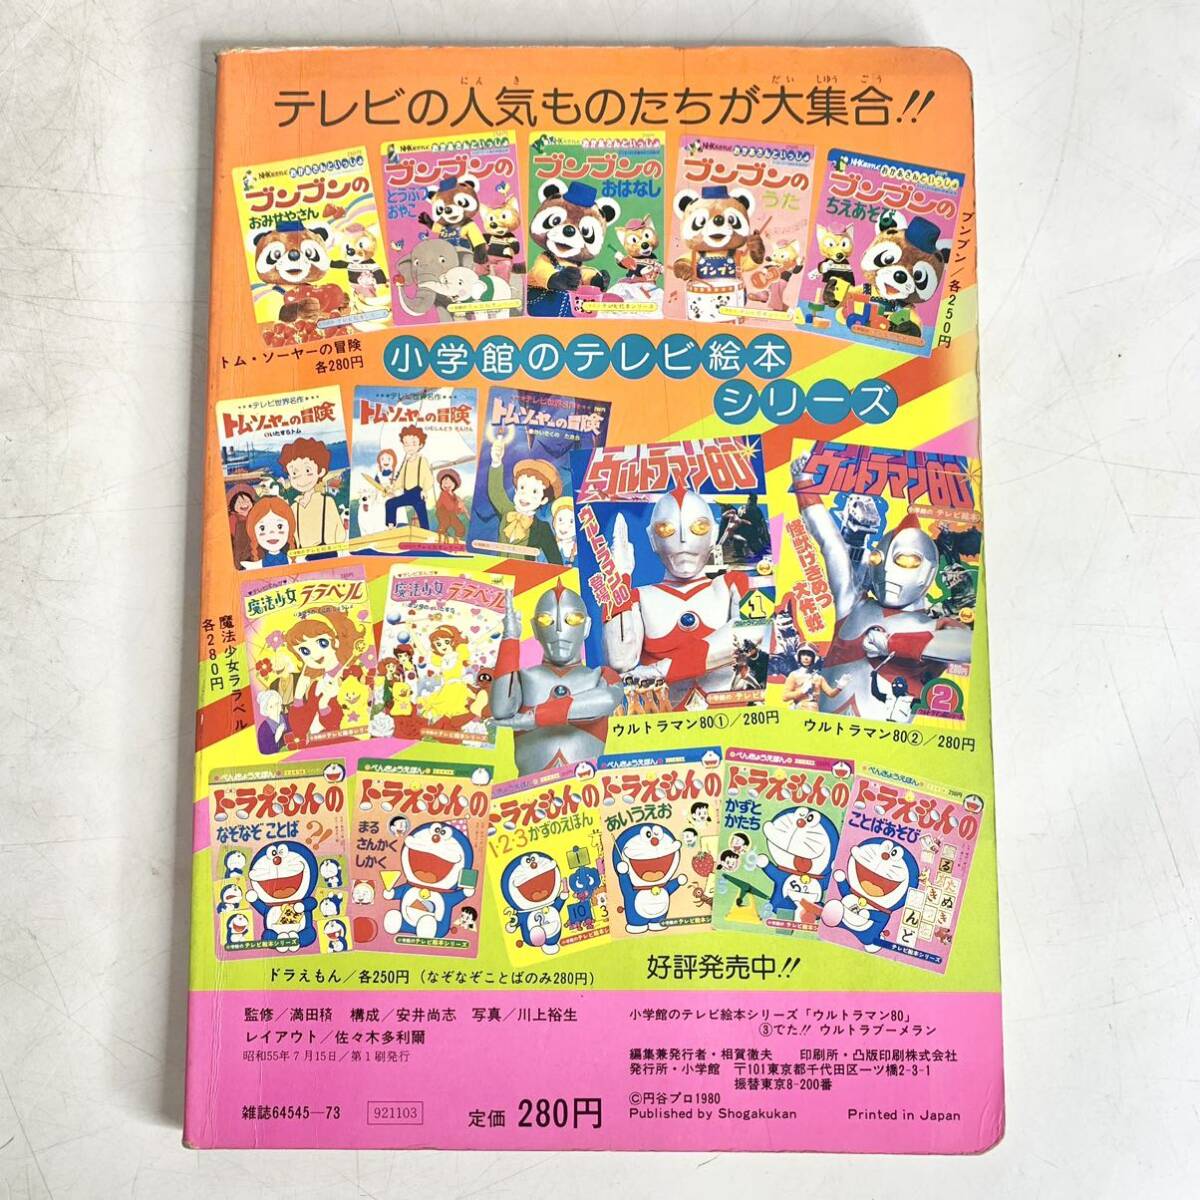  Showa Retro Ultraman 80 ③..!! Ultra boomerang Shogakukan Inc.. tv picture book jpy . Pro 1980 Showa era 55 year secondhand book picture book ... that time thing 